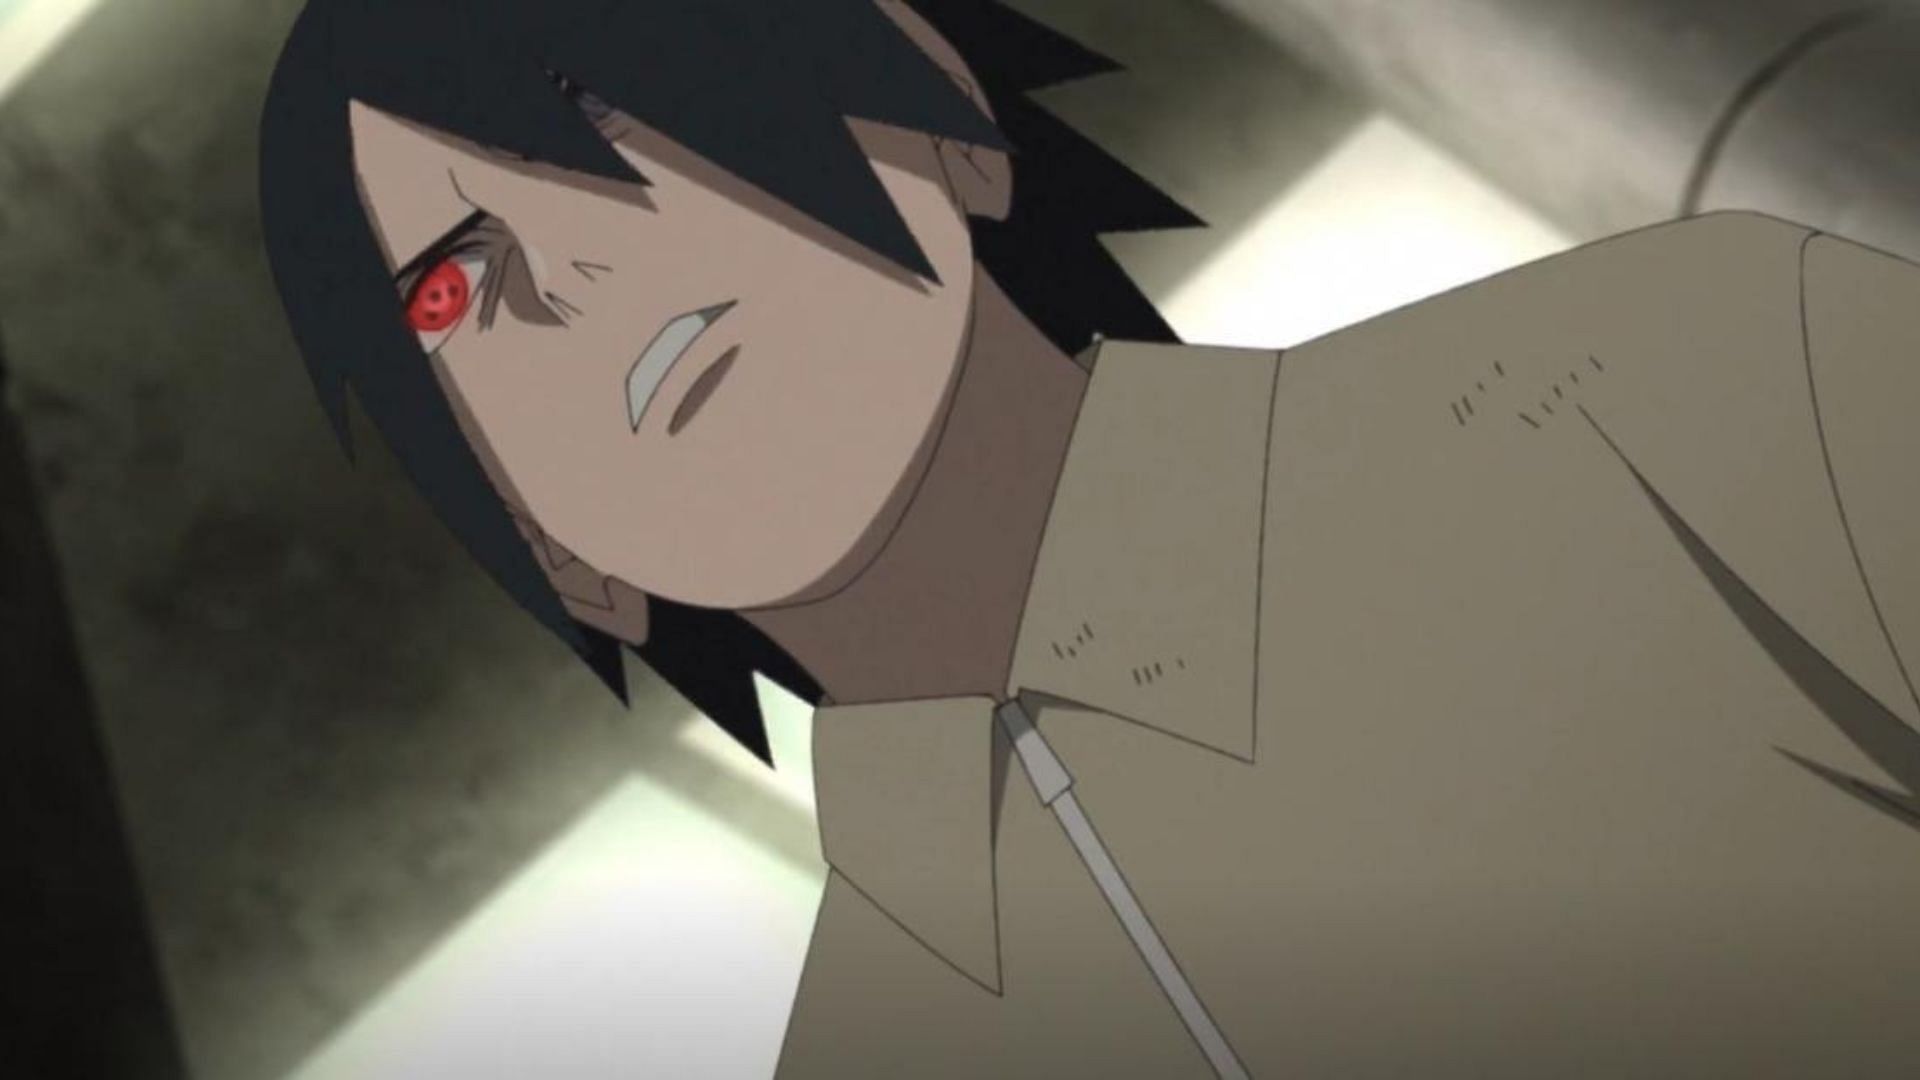 Sasuke Uchiha as seen in the Boruto anime